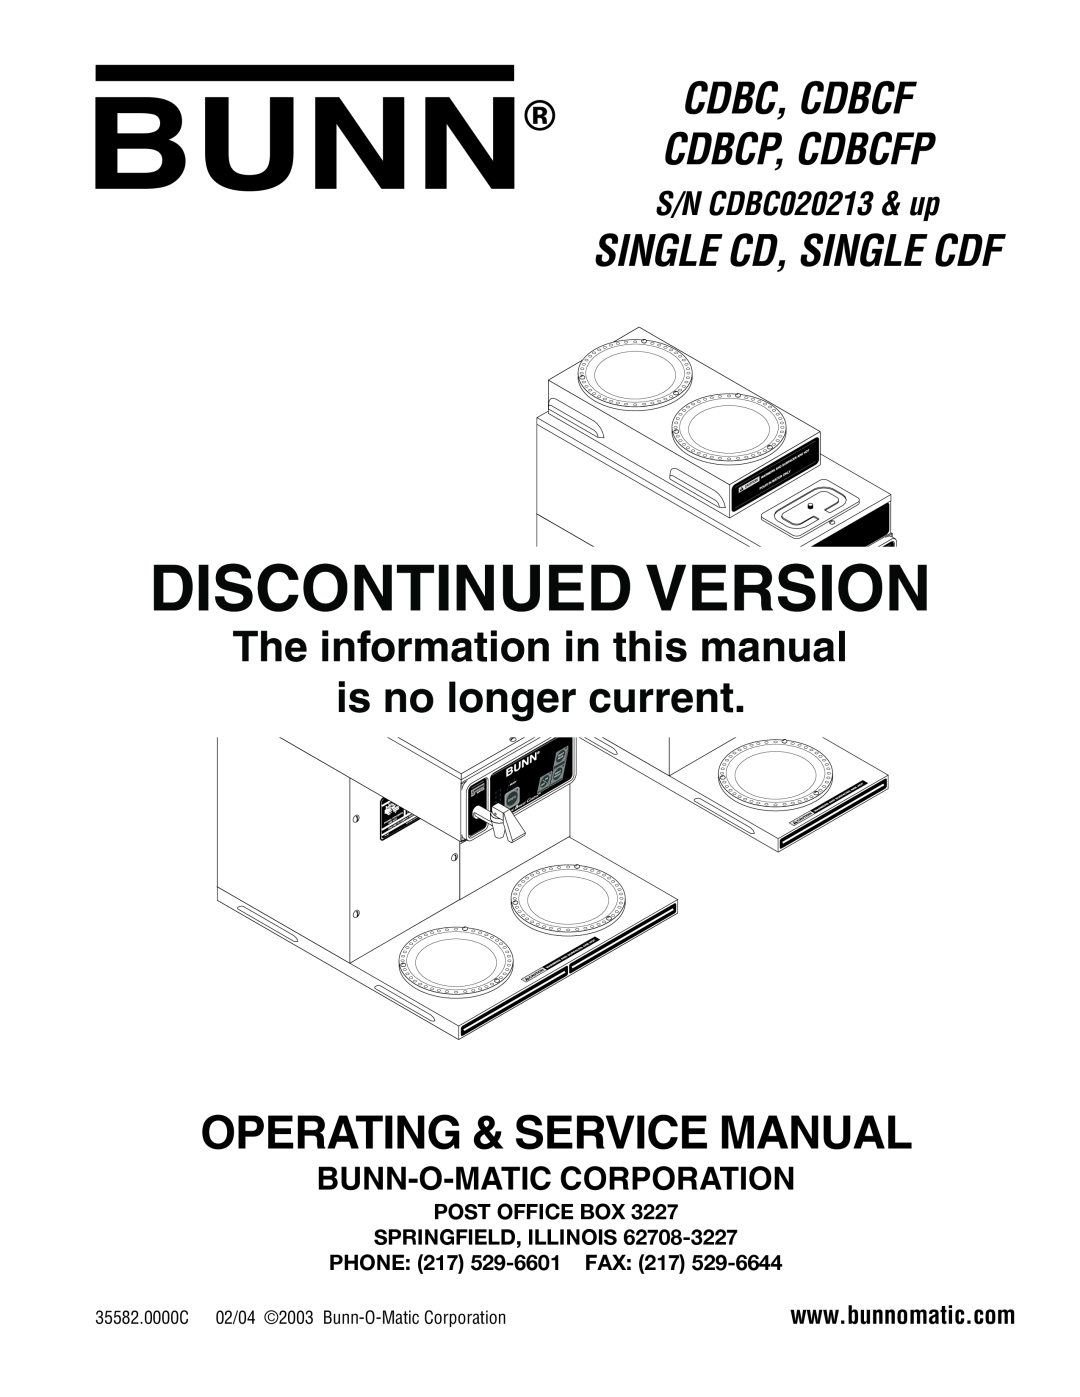 Bunn CDBCF service manual Bunn-O-Maticcorporation, Discontinued Version, Operating & Service Manual, Single Cd, Single Cdf 